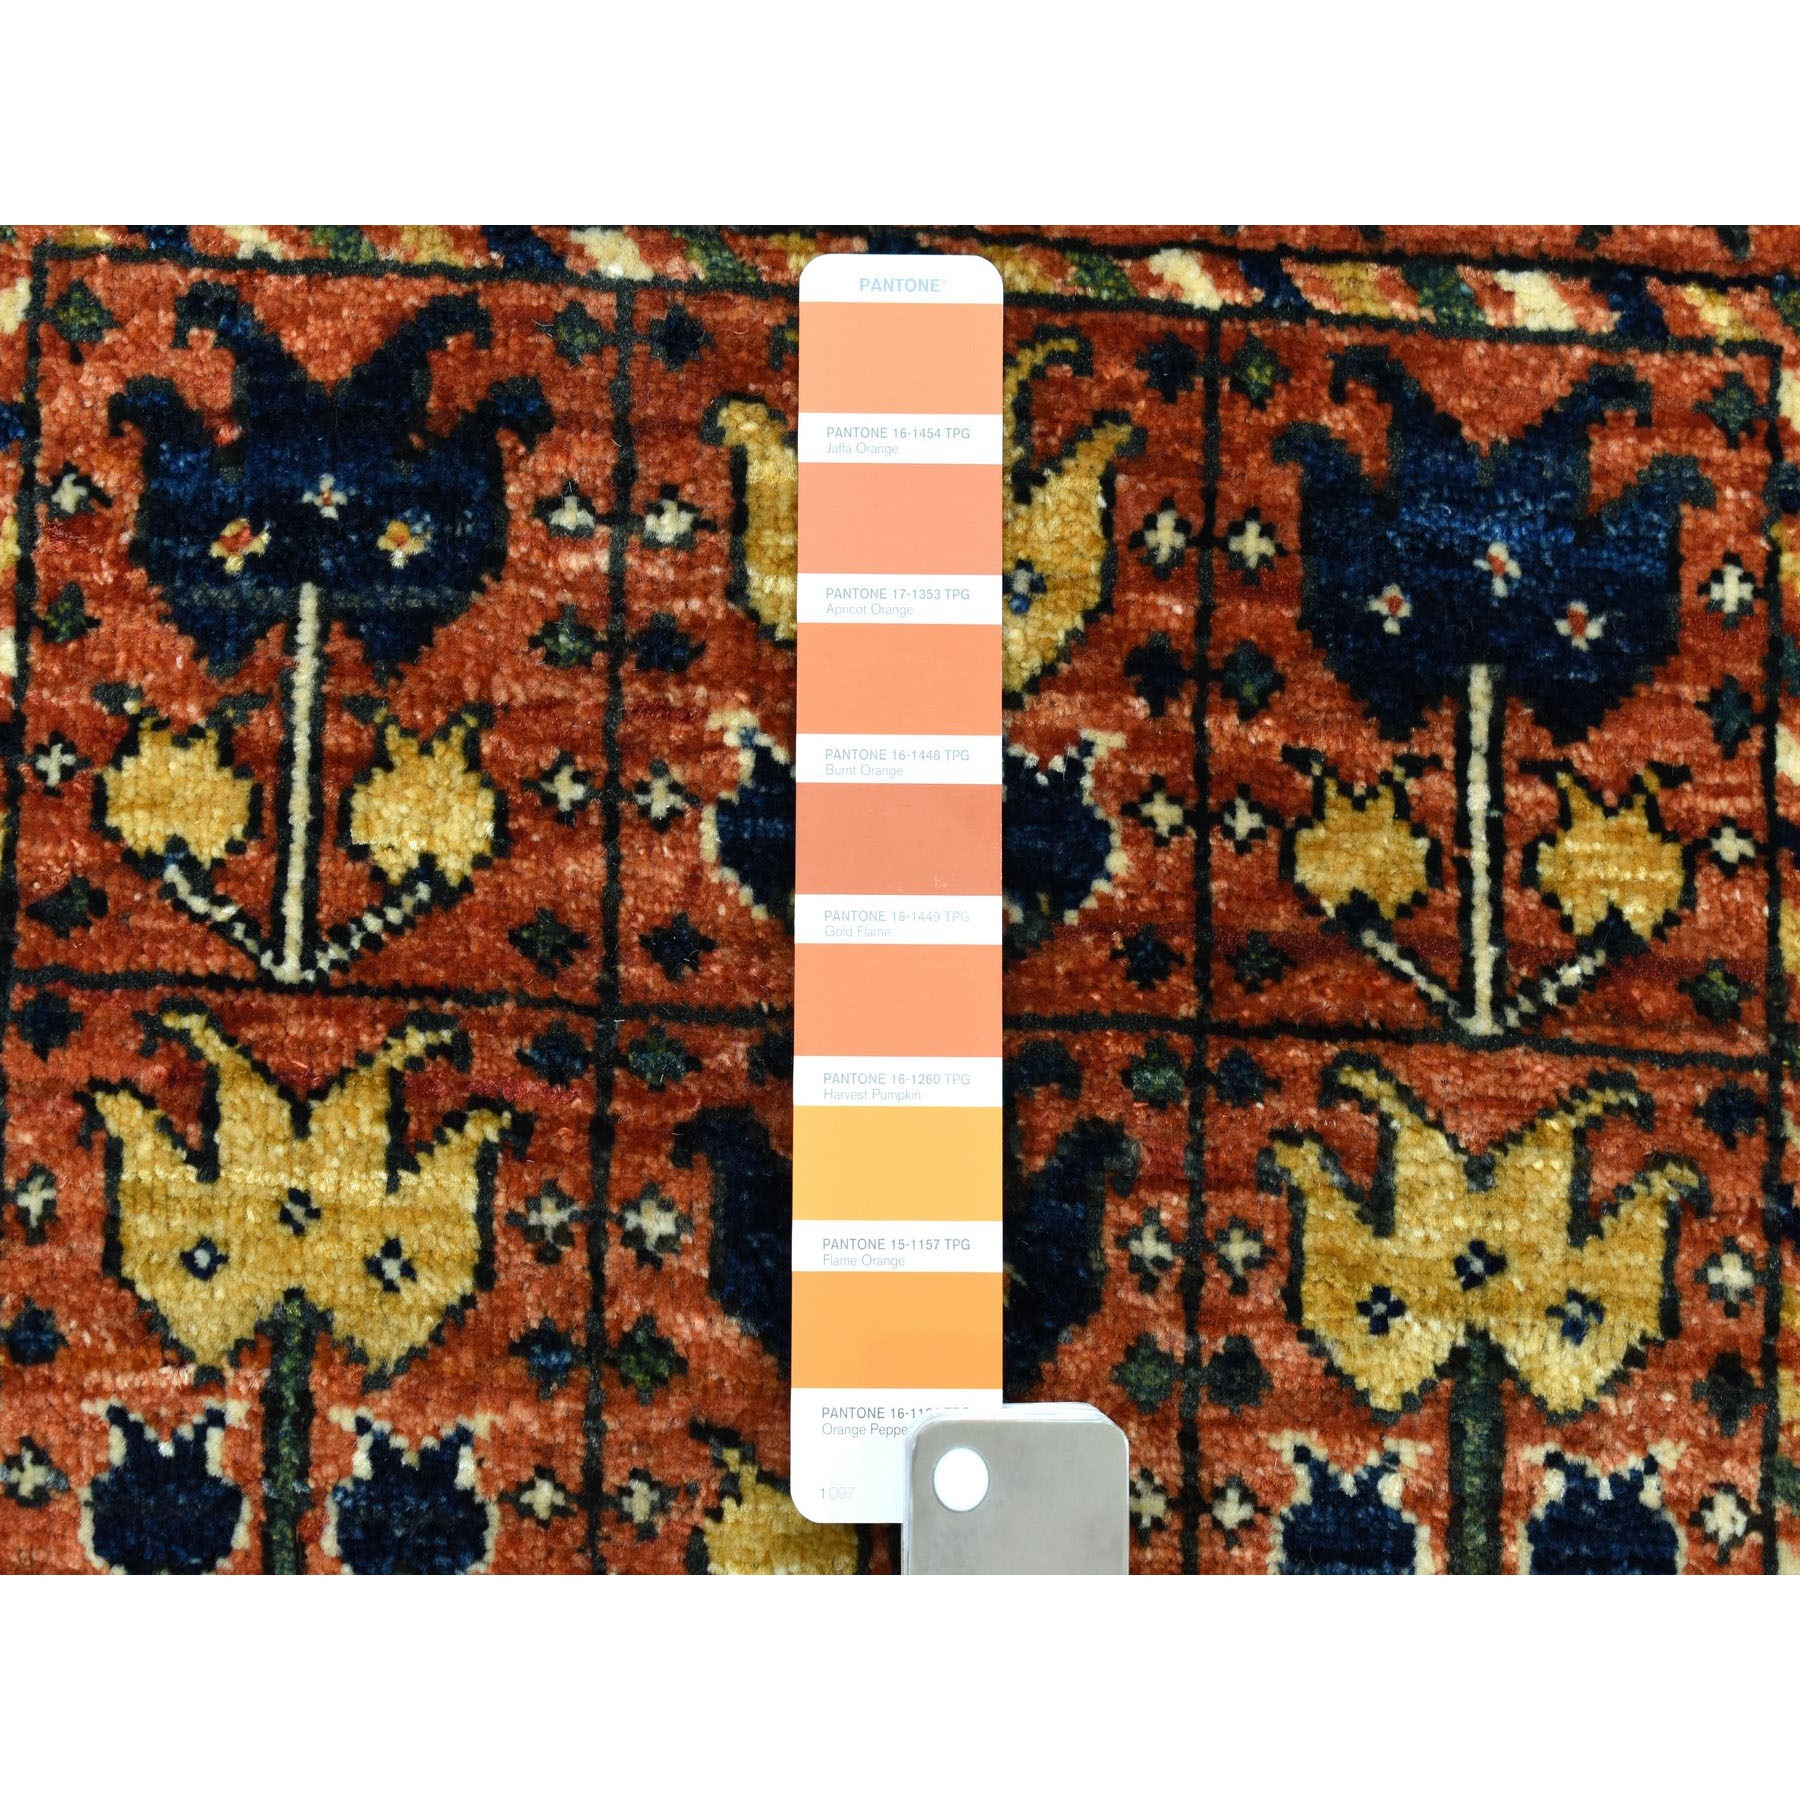 2-x2-10  Orange Afghan Ersari Tribal Design Hand Knotted Pure Wool Oriental Rug 